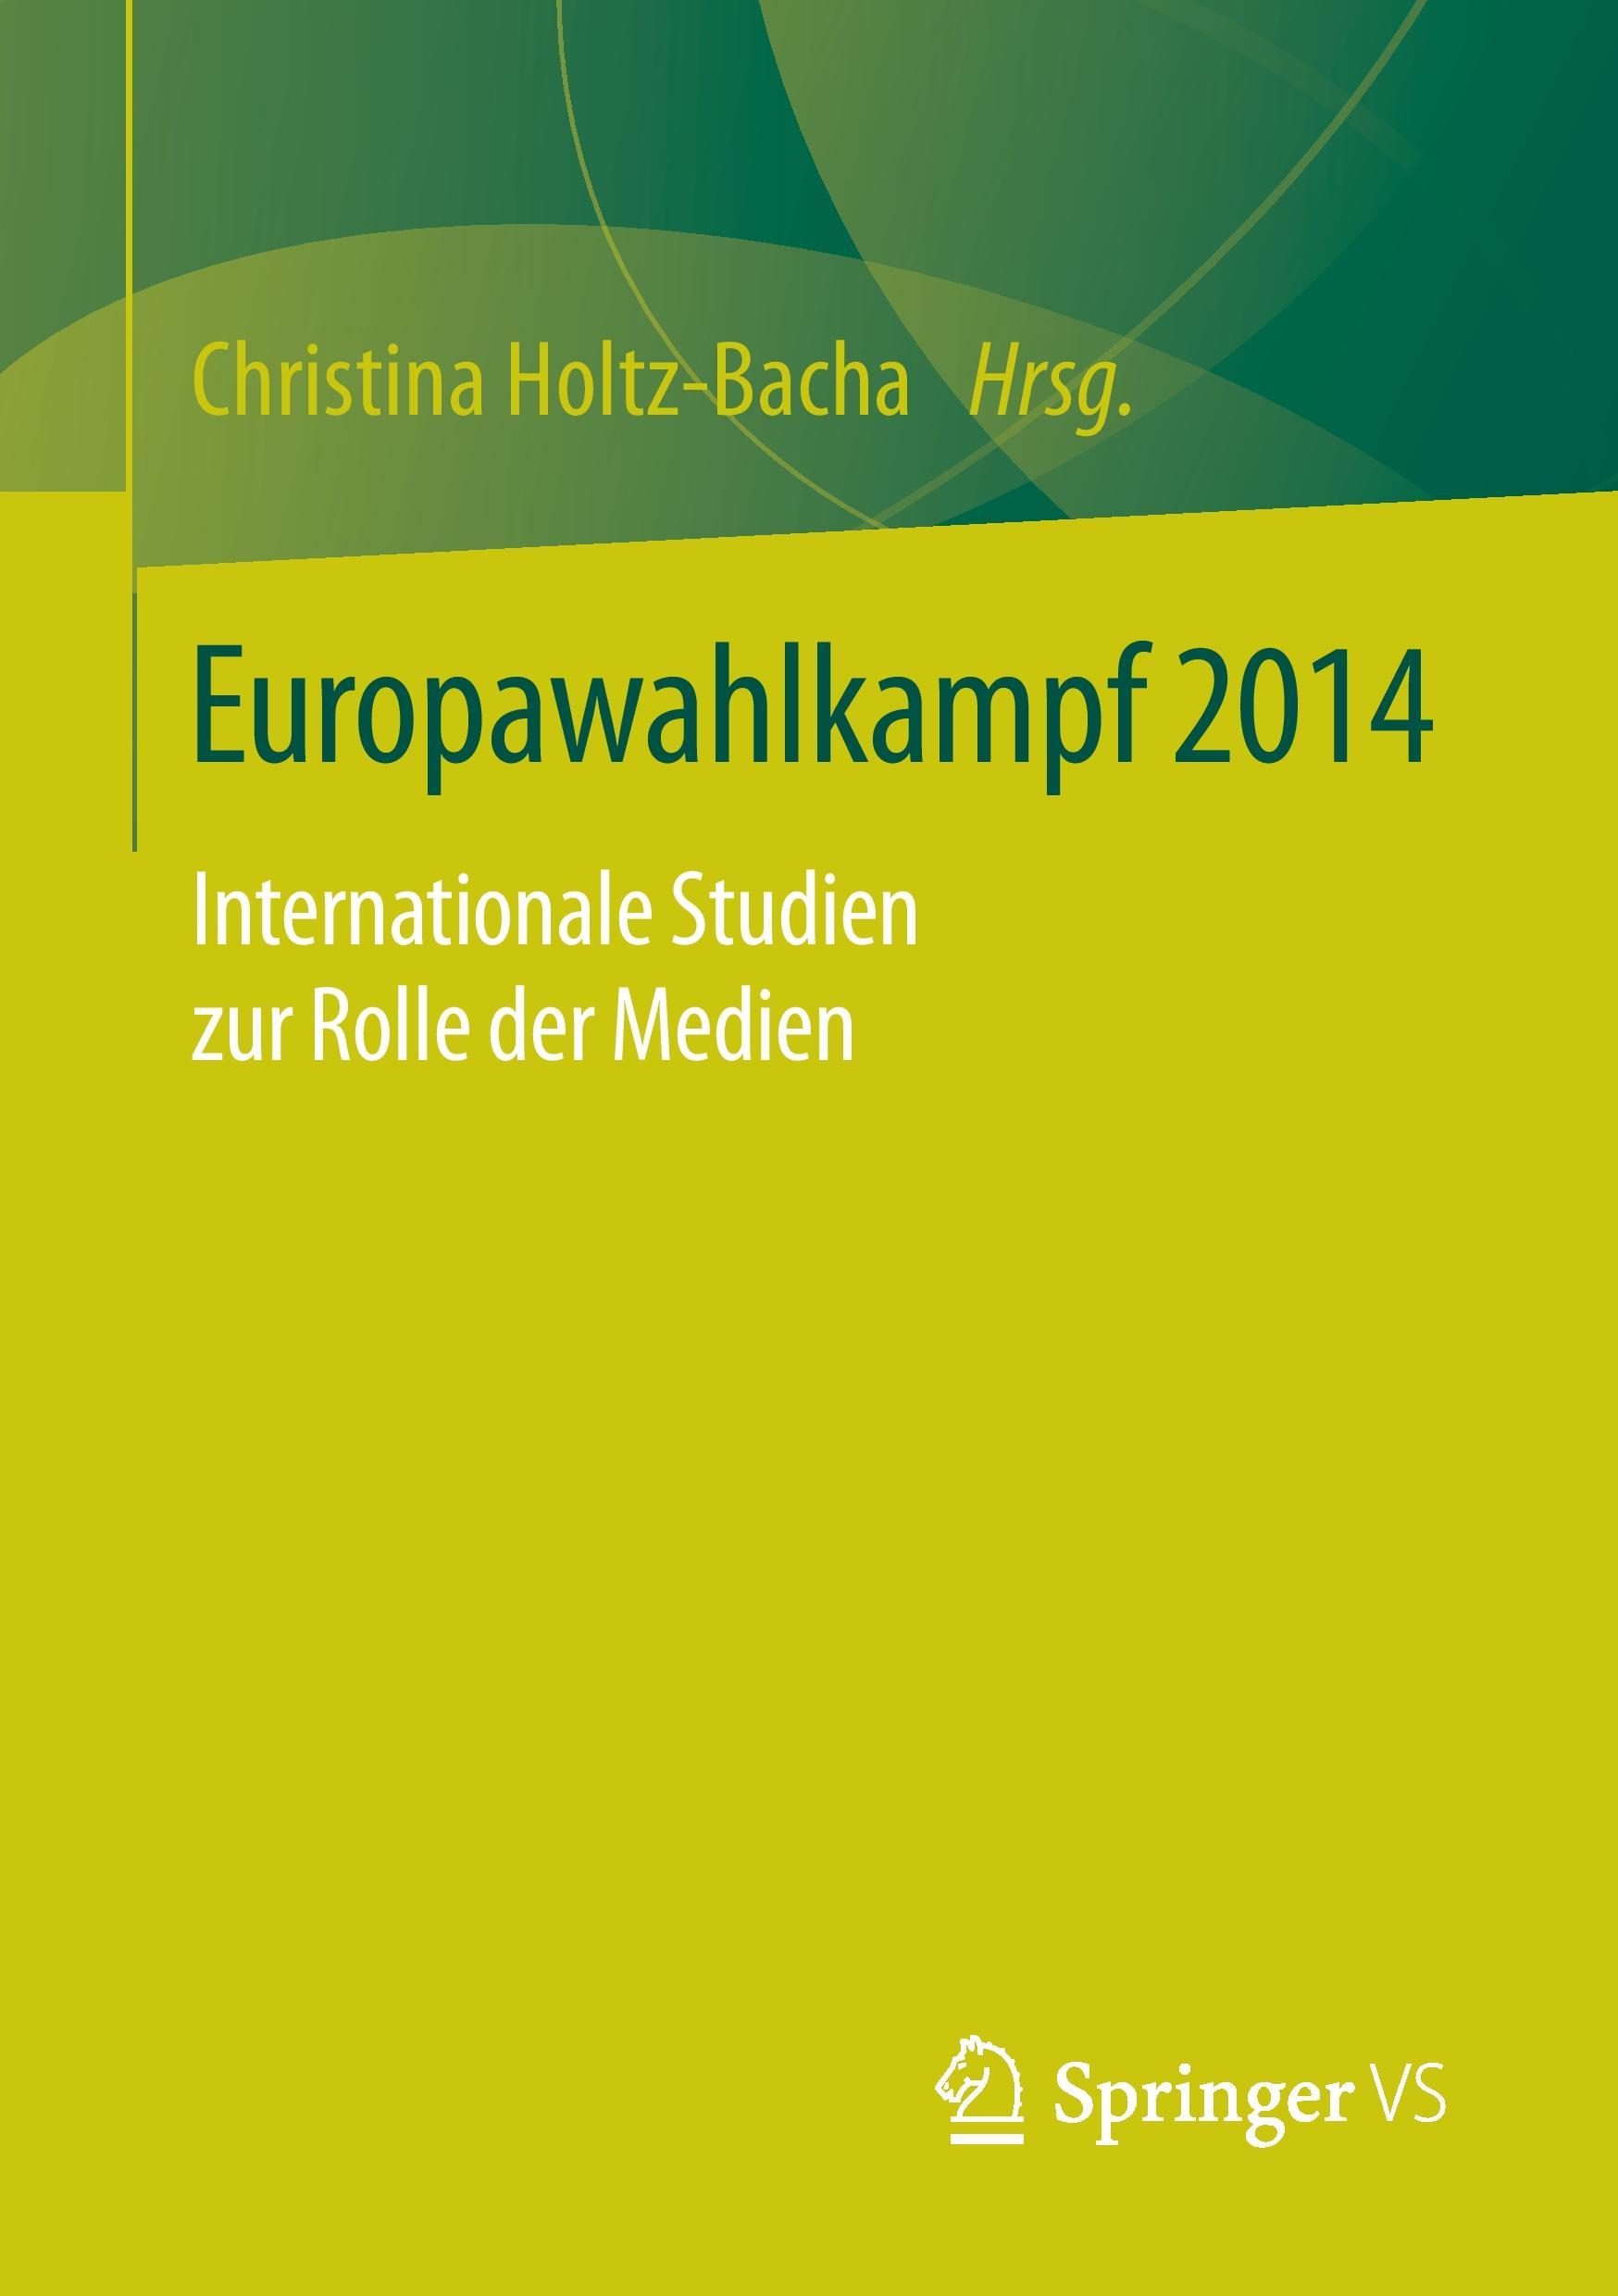 Europawahl 2014 - European Election 2014 - Holtz-Bacha, Christina